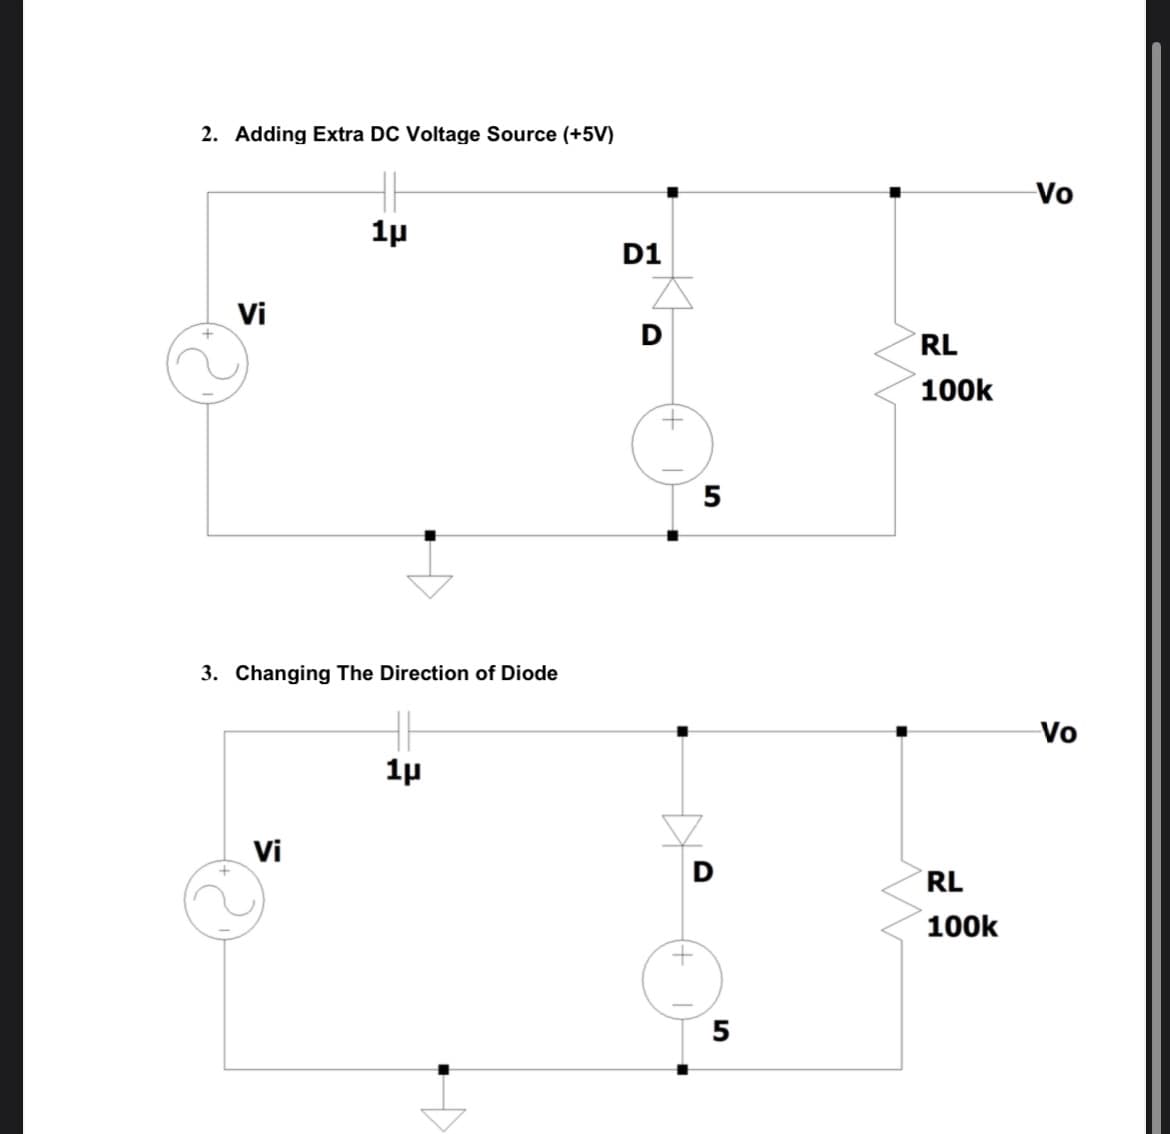 2. Adding Extra DC Voltage Source (+5V)
Vi
1μ
3. Changing The Direction of Diode
Vi
1μ
D1
D
5
D
5
RL
100k
RL
100k
Vo
Vo